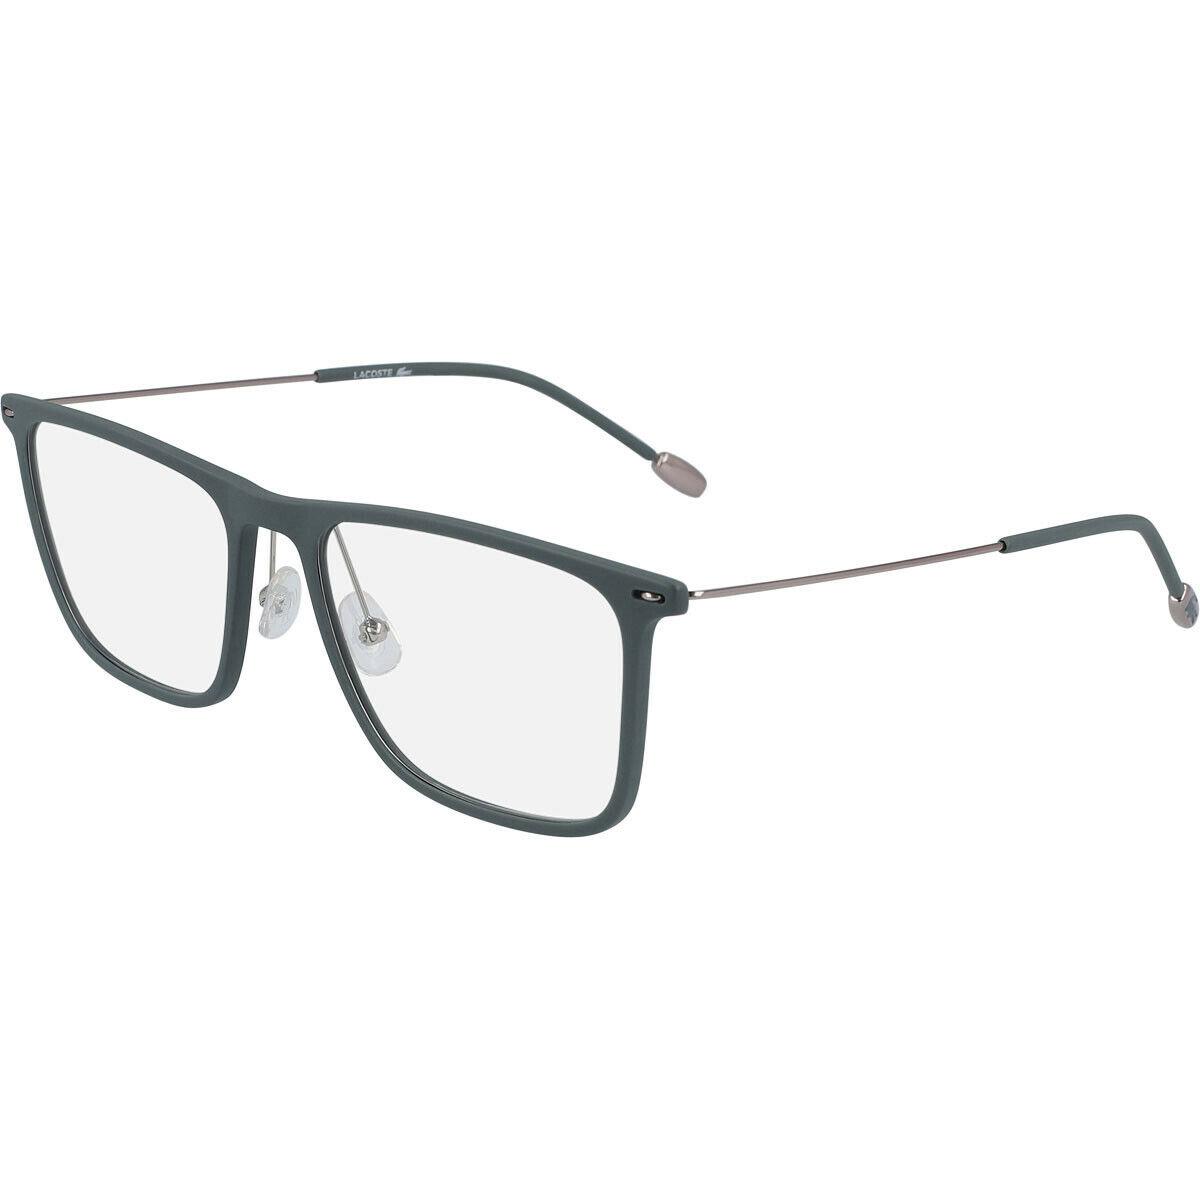 Lacoste L2829 035 54mm Grey Men`s Ophthalmic Rx Eyeglasses Frame - Gray Frame